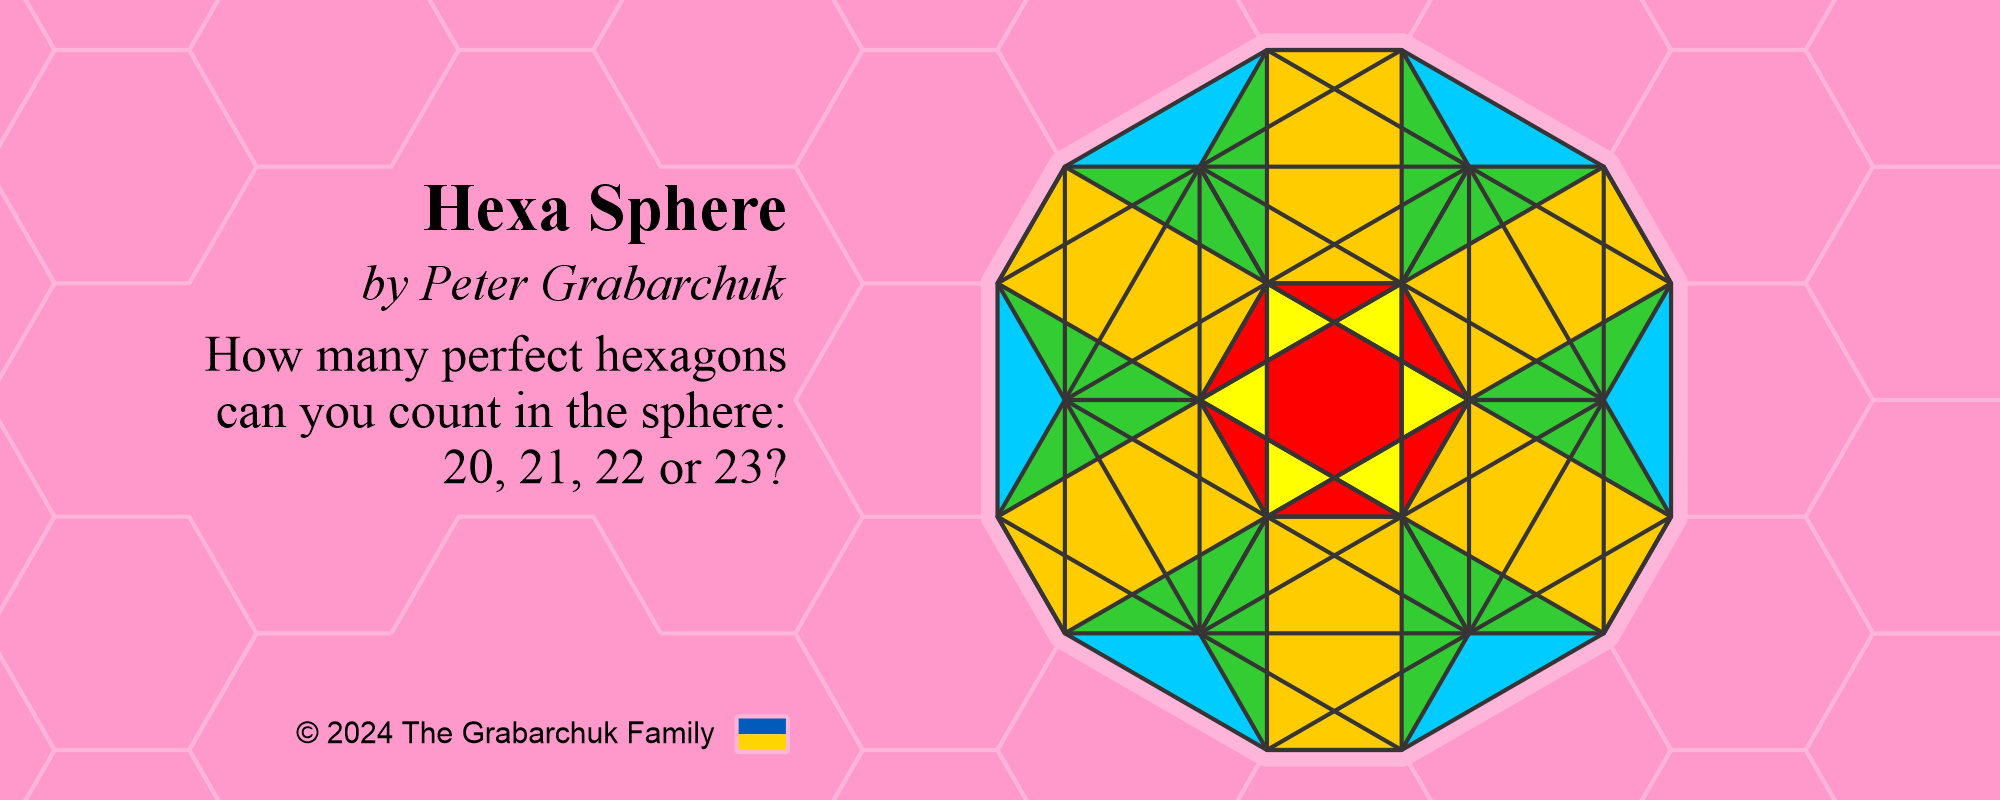 Hexa Sphere by Peter Grabarchuk